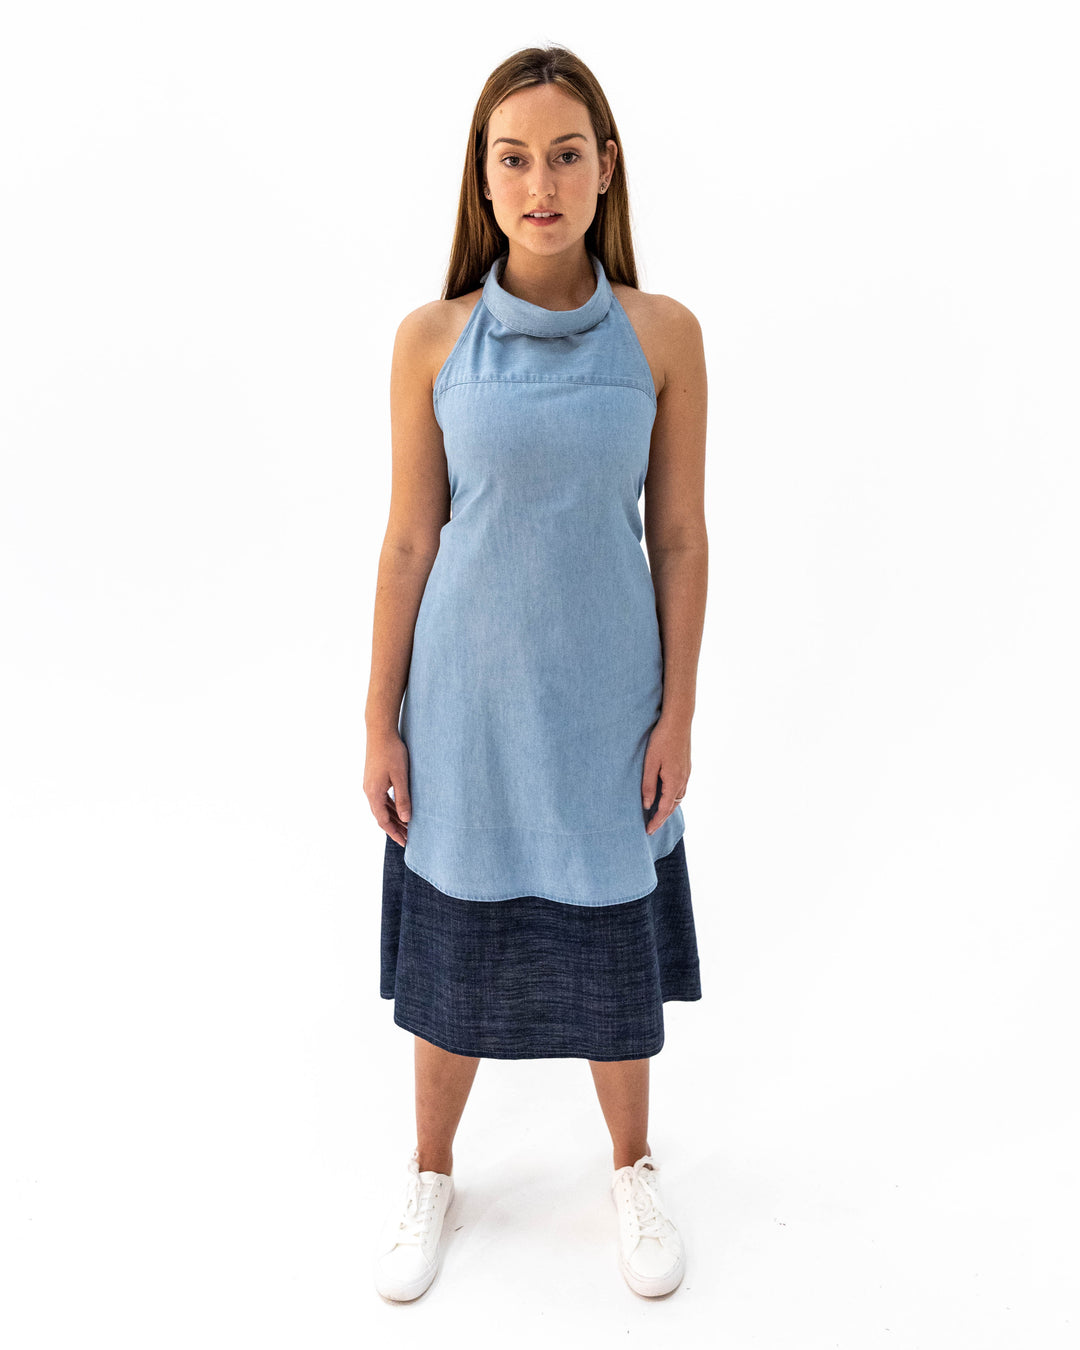 Debbie Shirt Dress - Chambray Denim Short